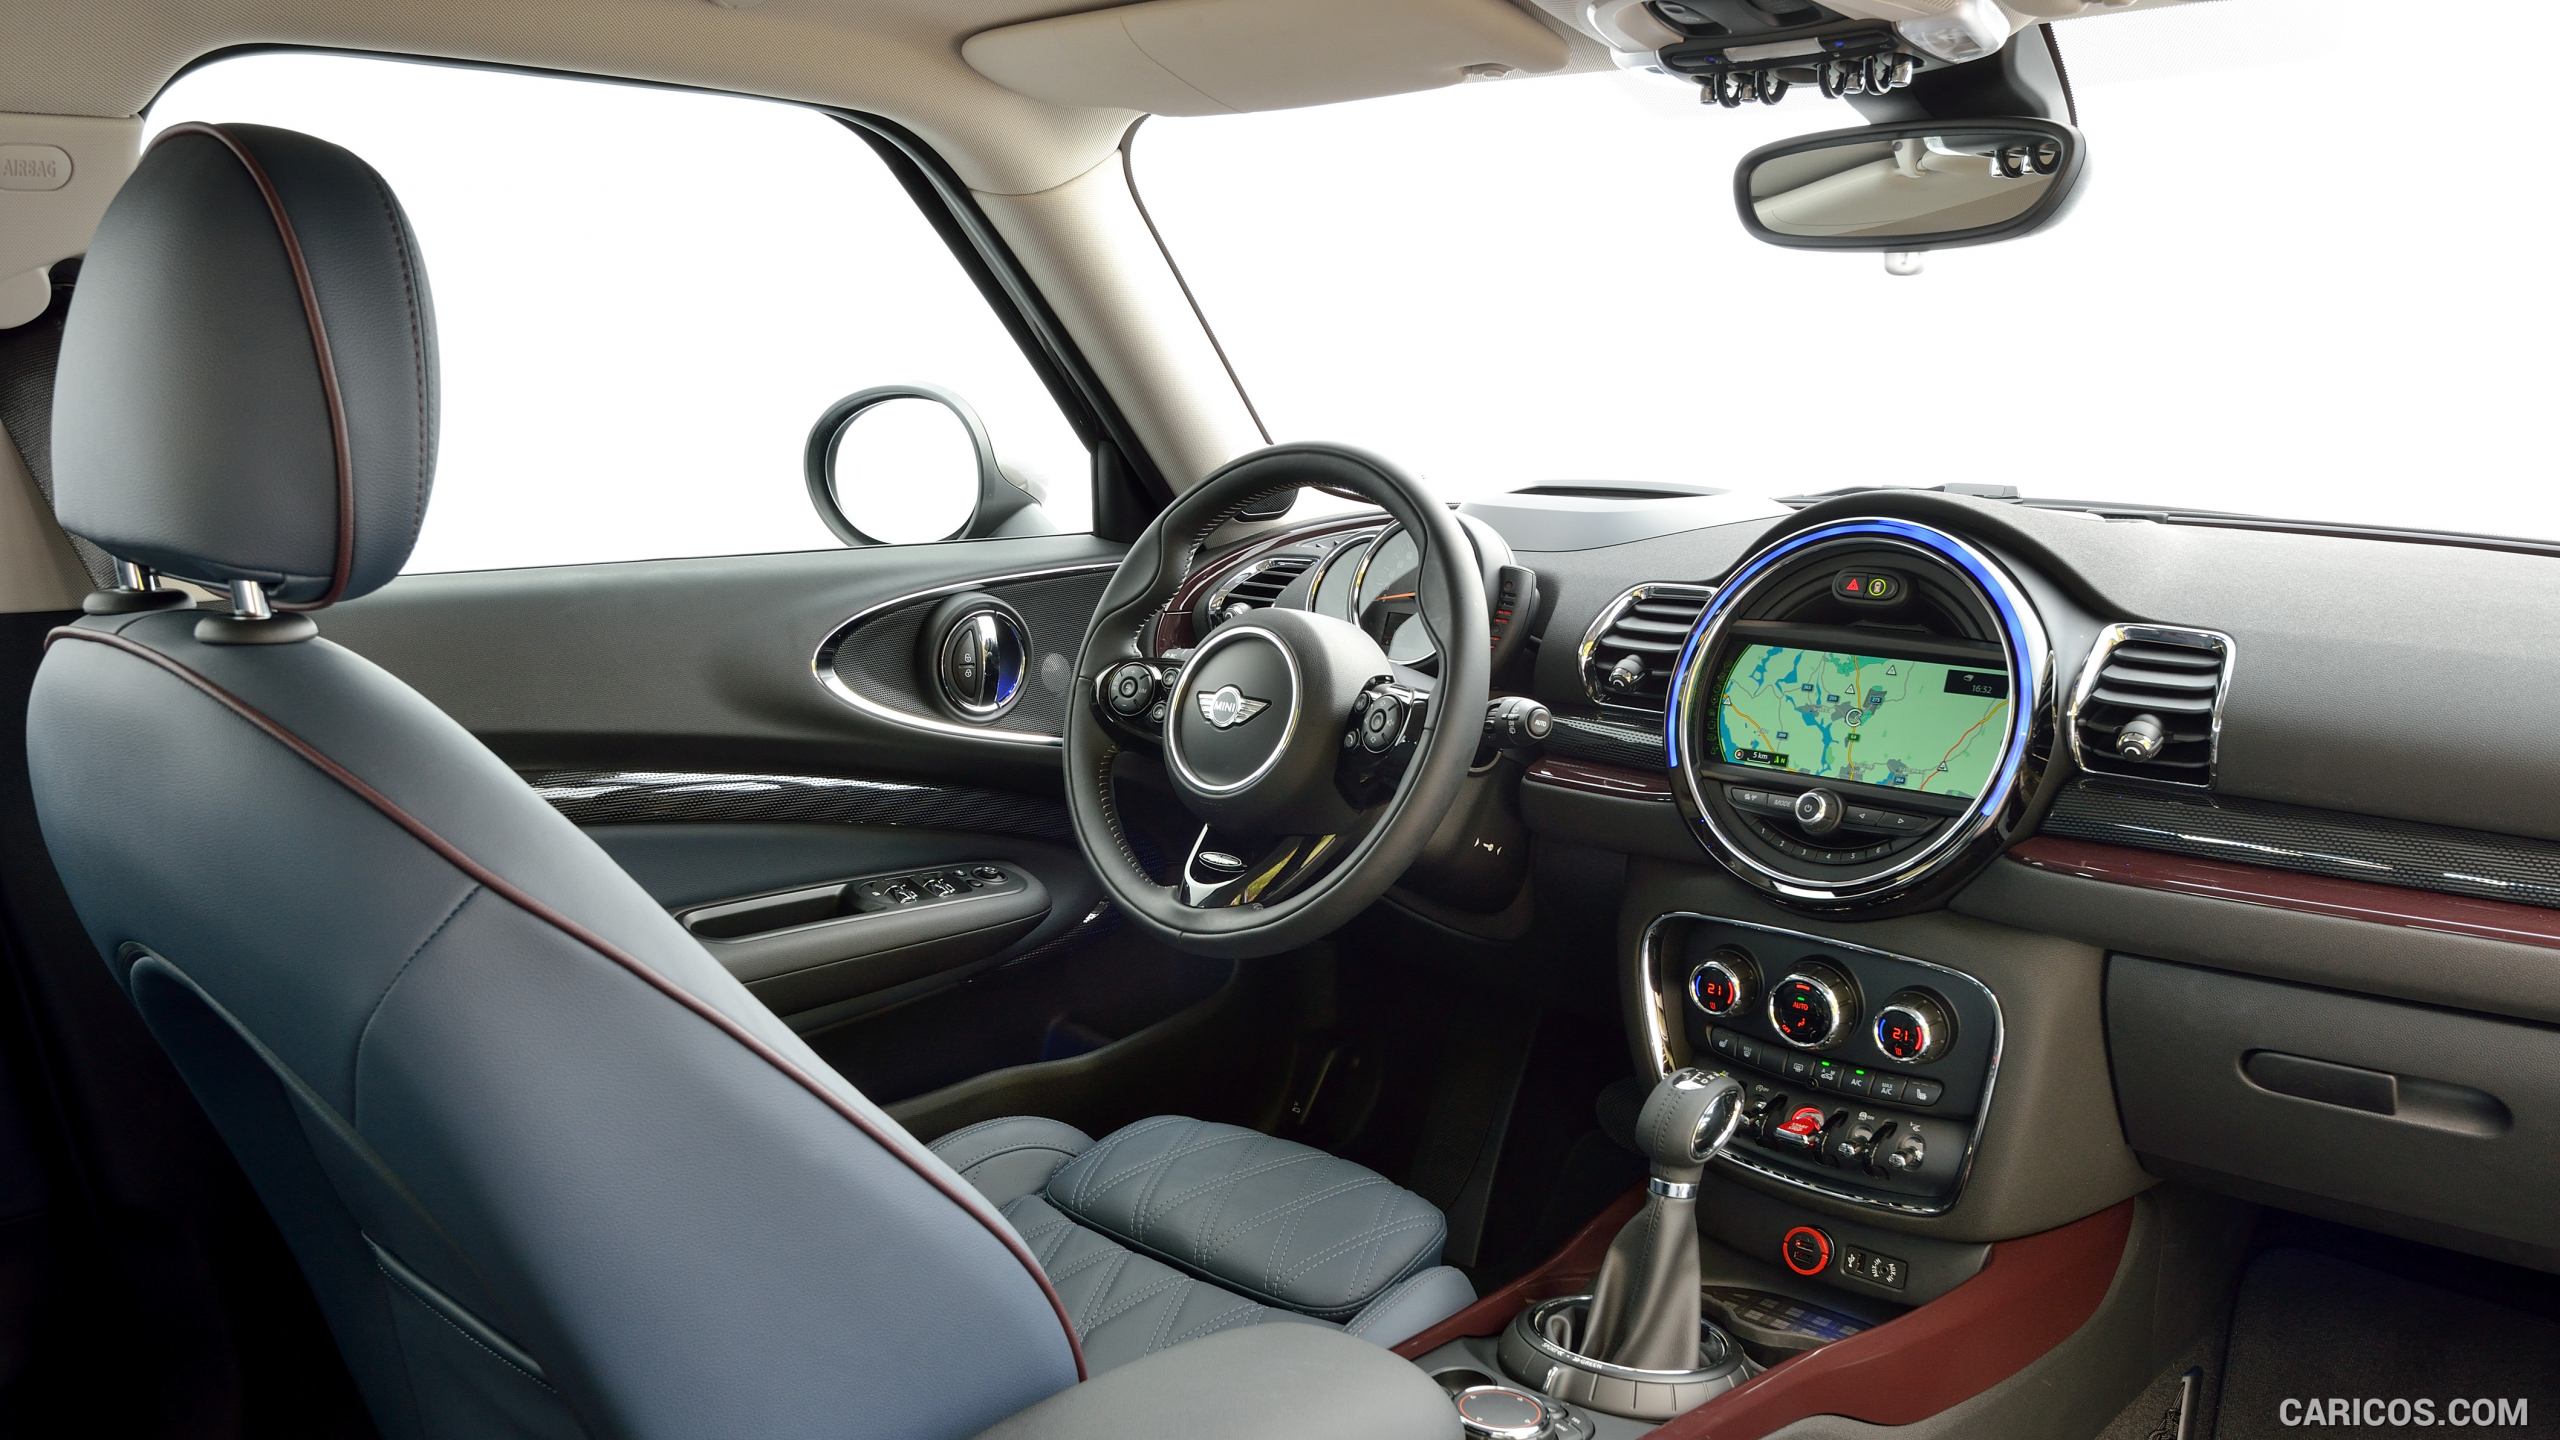 2016 MINI Cooper S Clubman in Metallic Pure Burgundy - Interior, Cockpit, #359 of 380